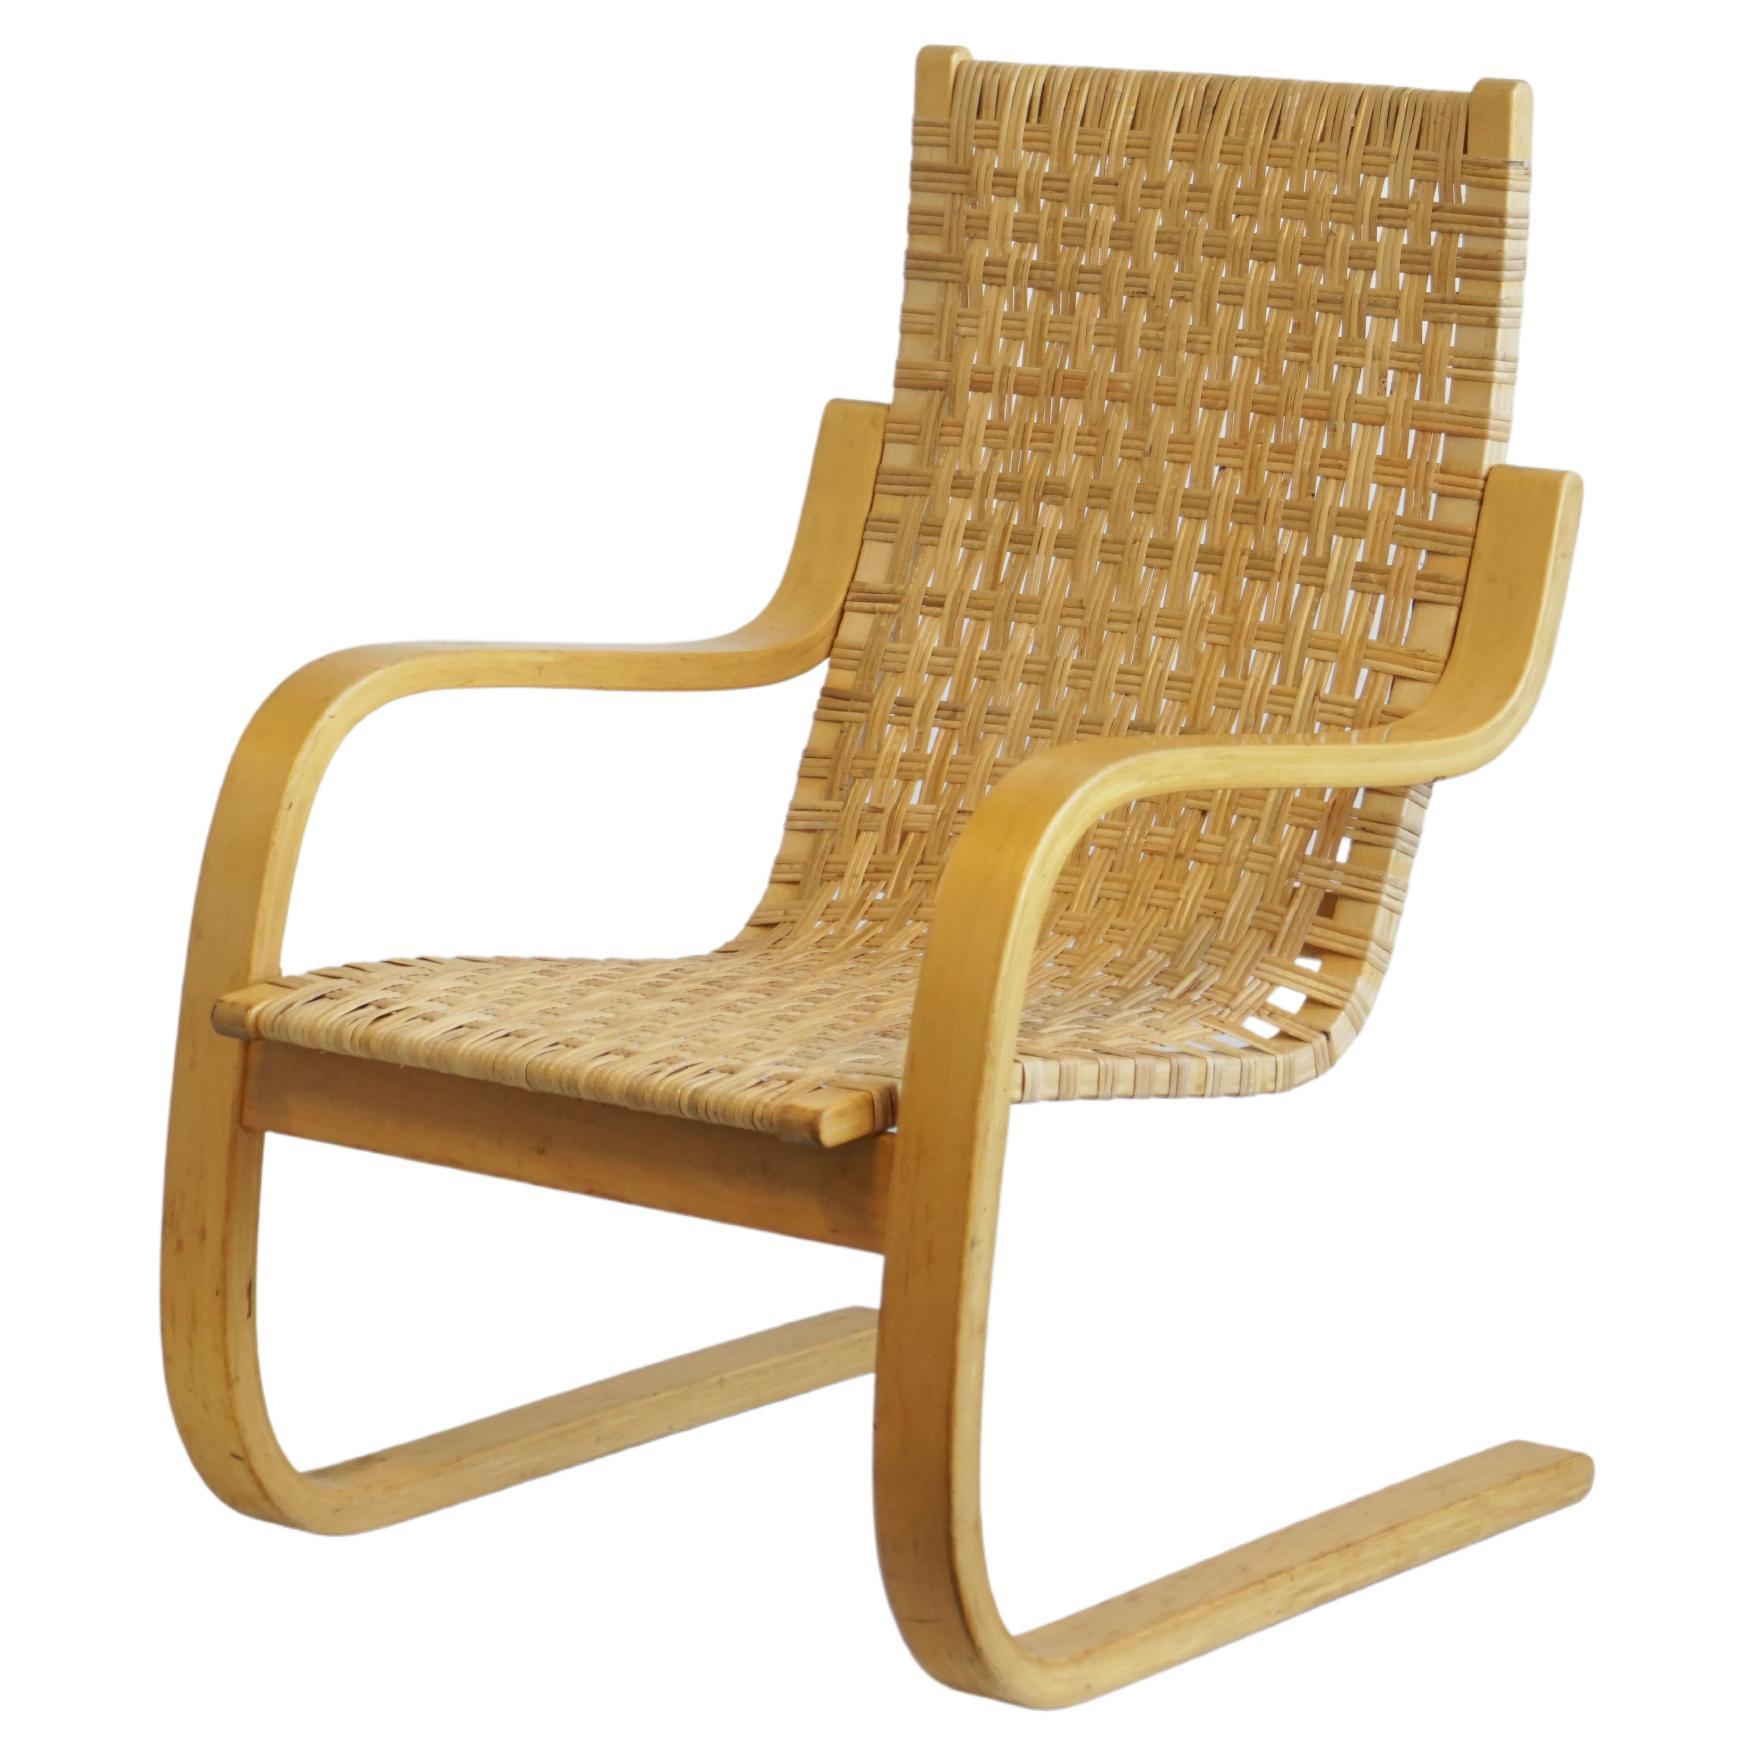 1960 Alvar Aalto Cantilever Chair Model 406 by Artek in Birch and Cane Webbing